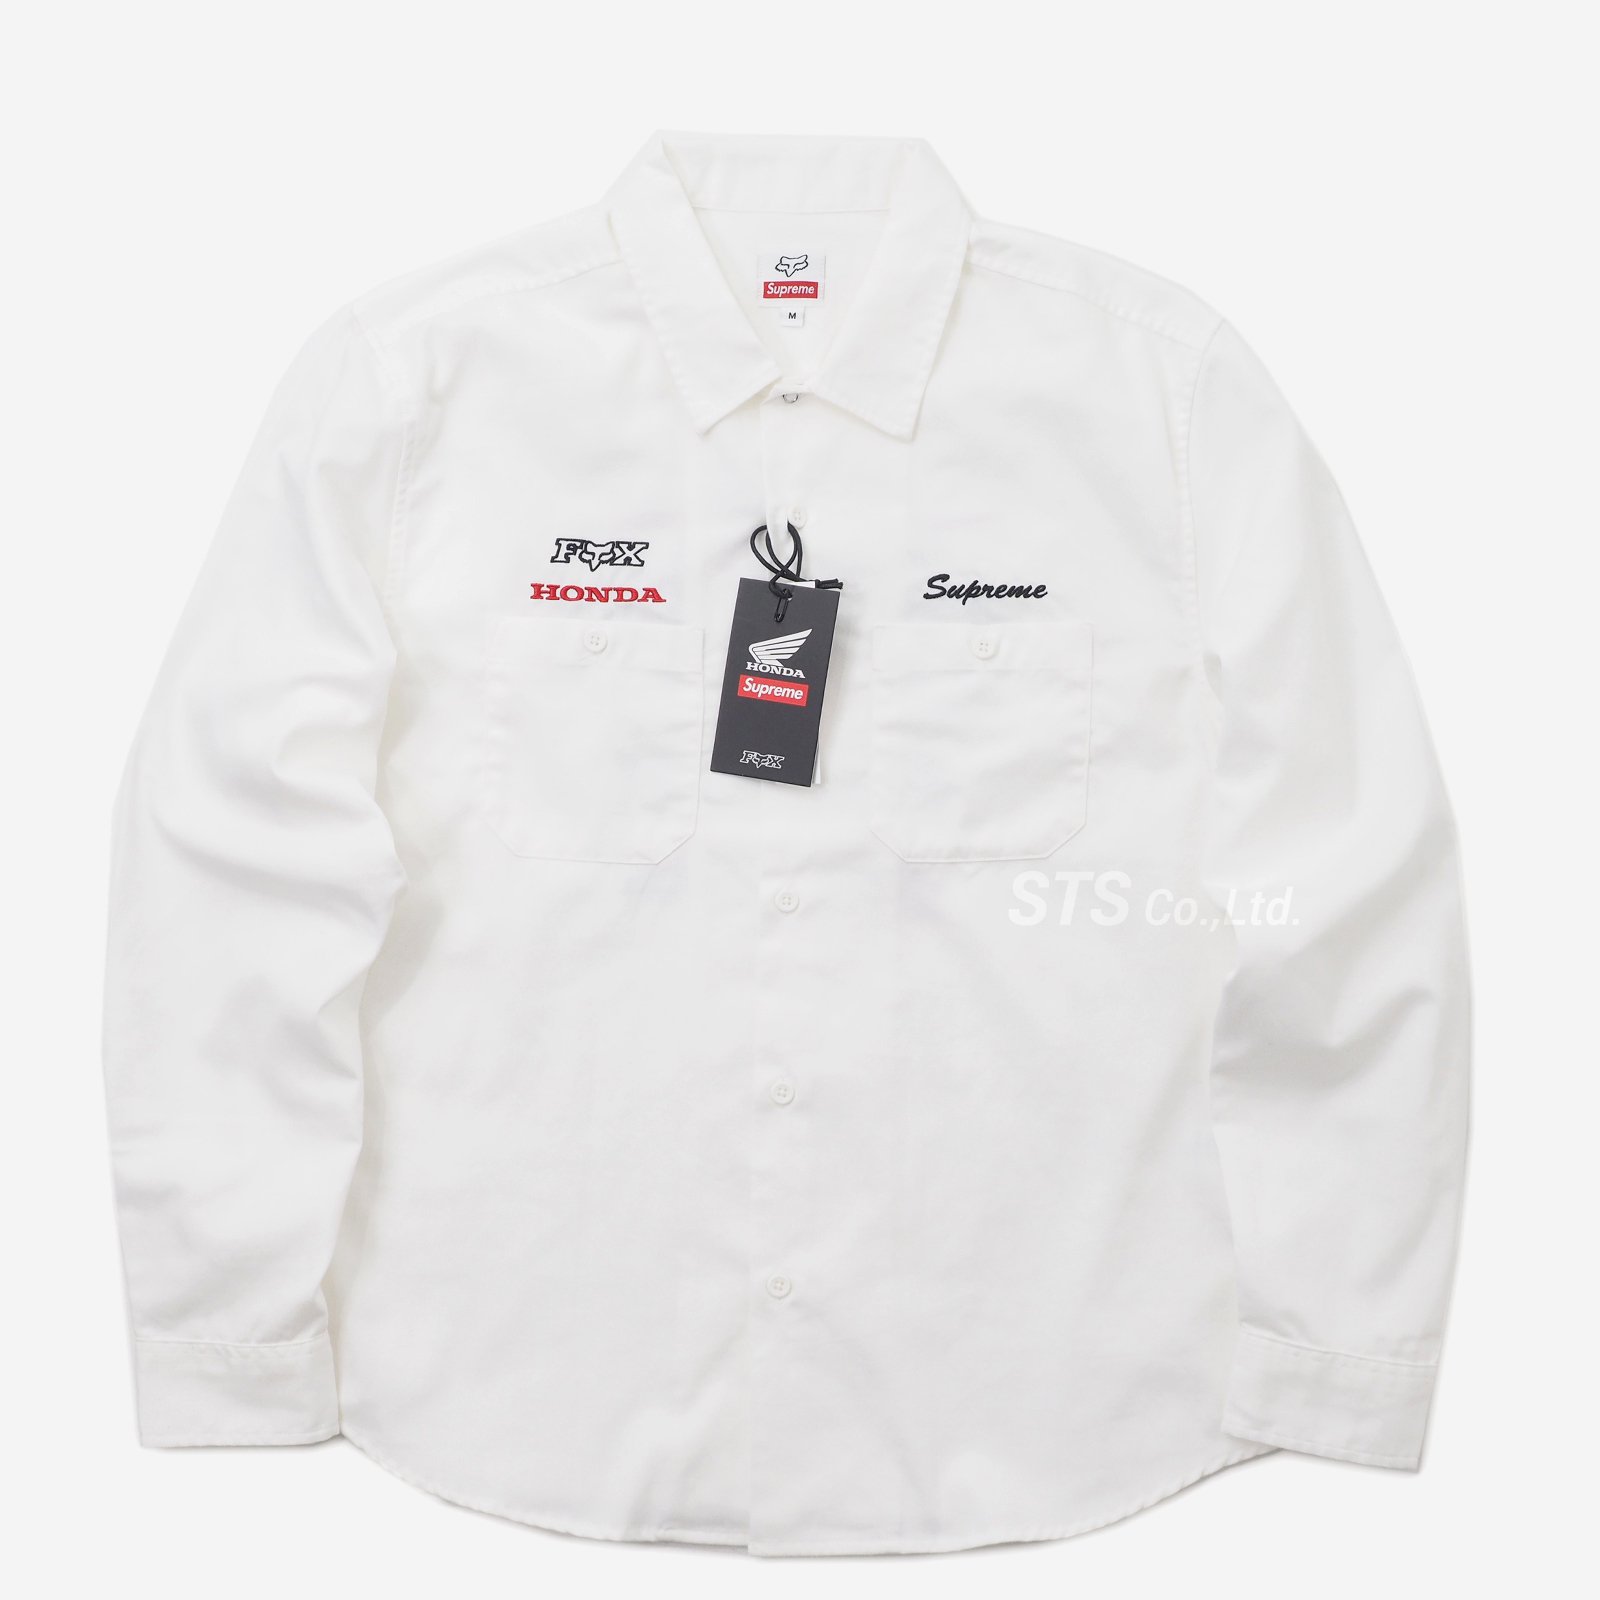 Supreme/Honda/Fox Racing Work Shirt - ParkSIDER